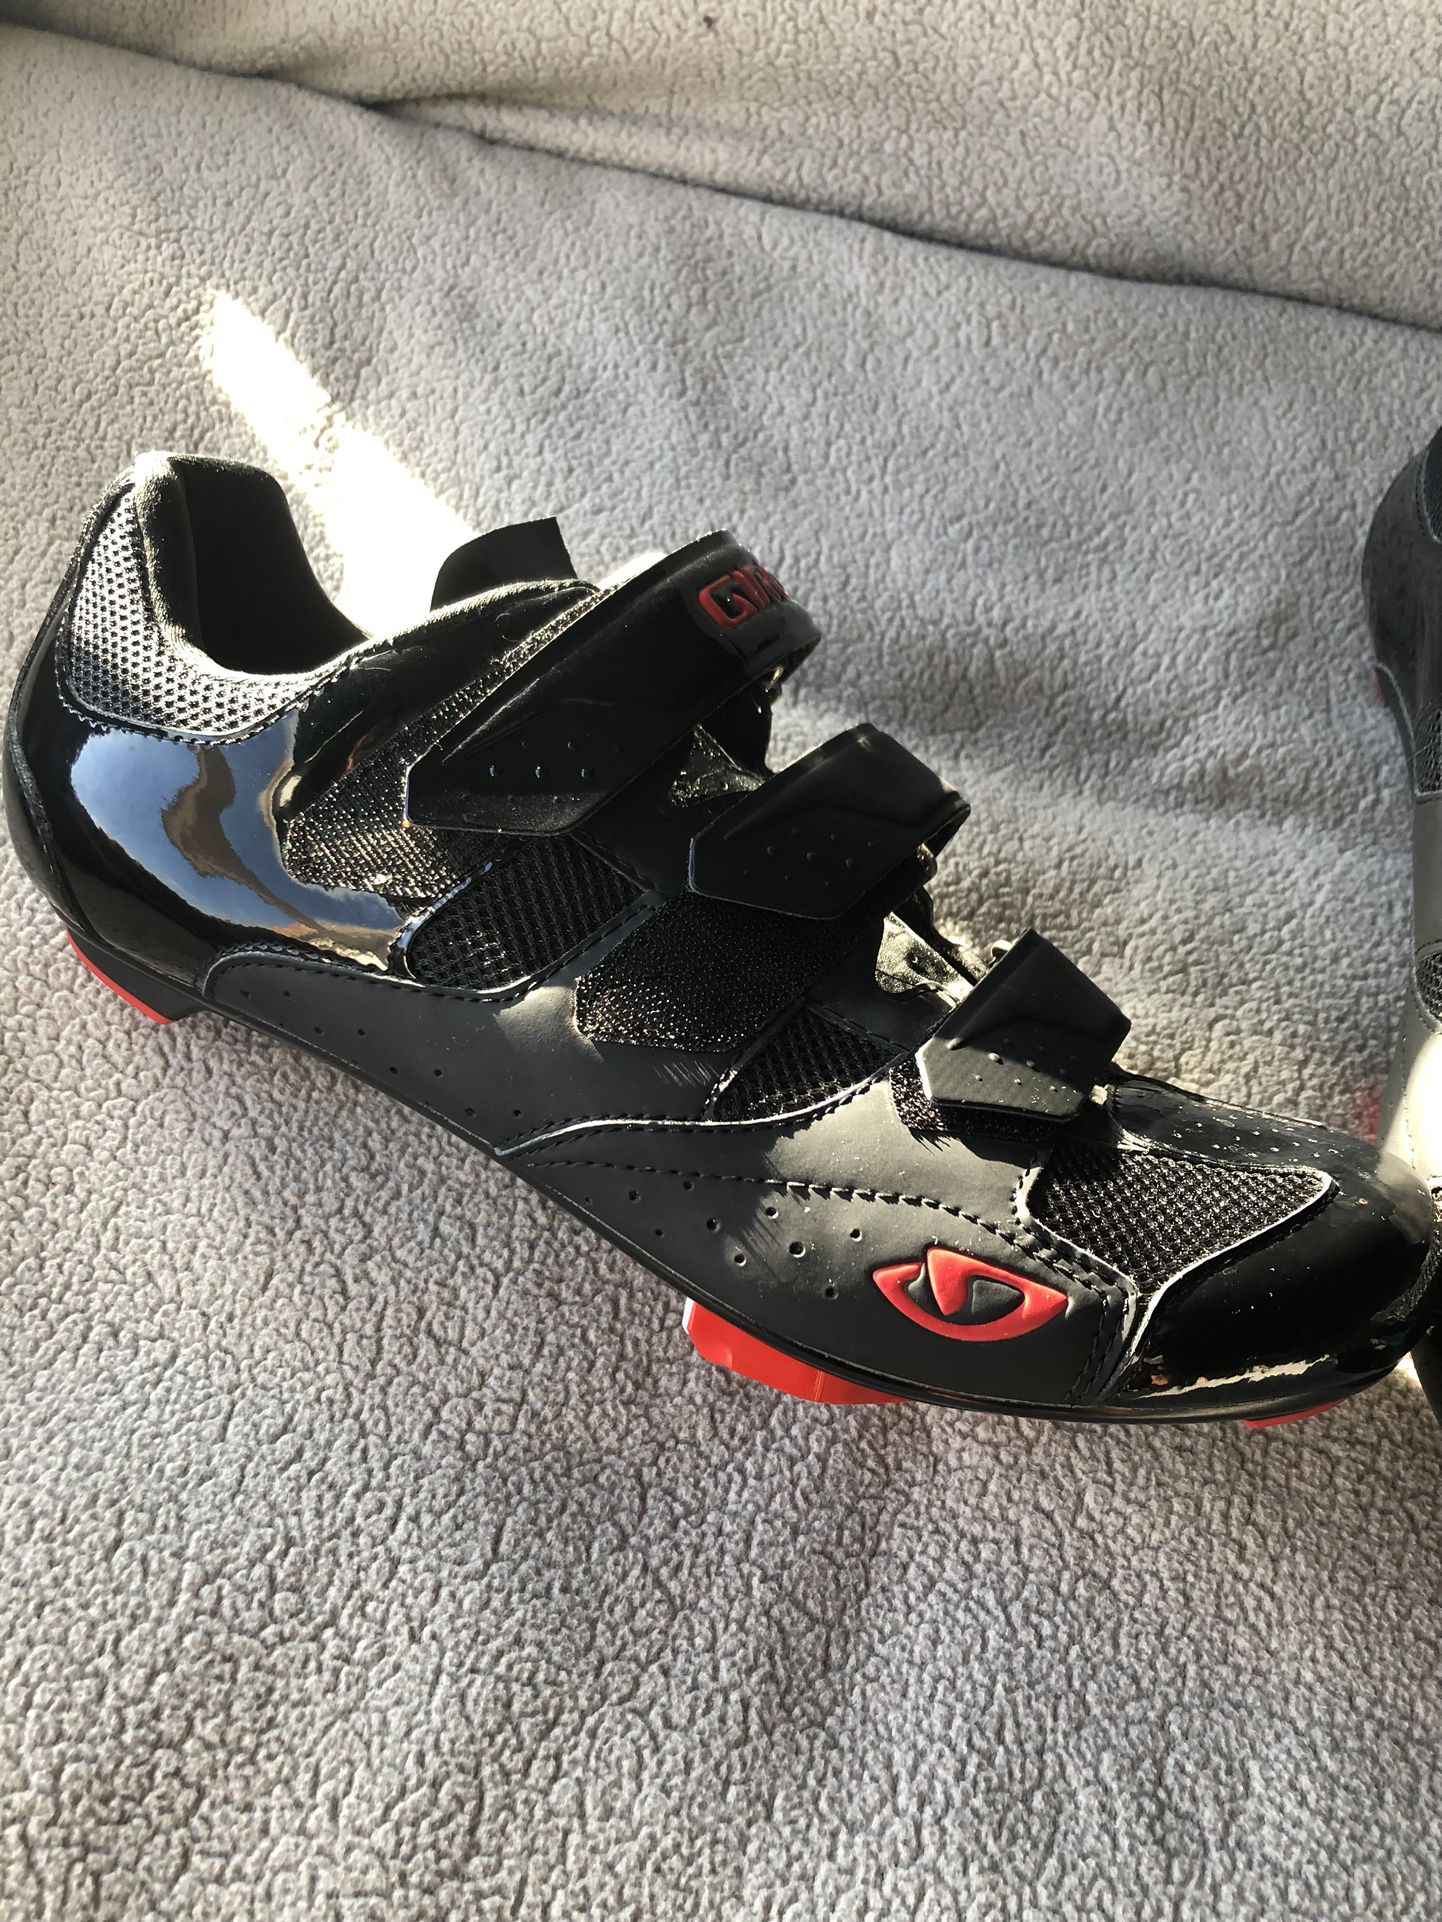 Giro Skion Road Bike Men’s Shoes 